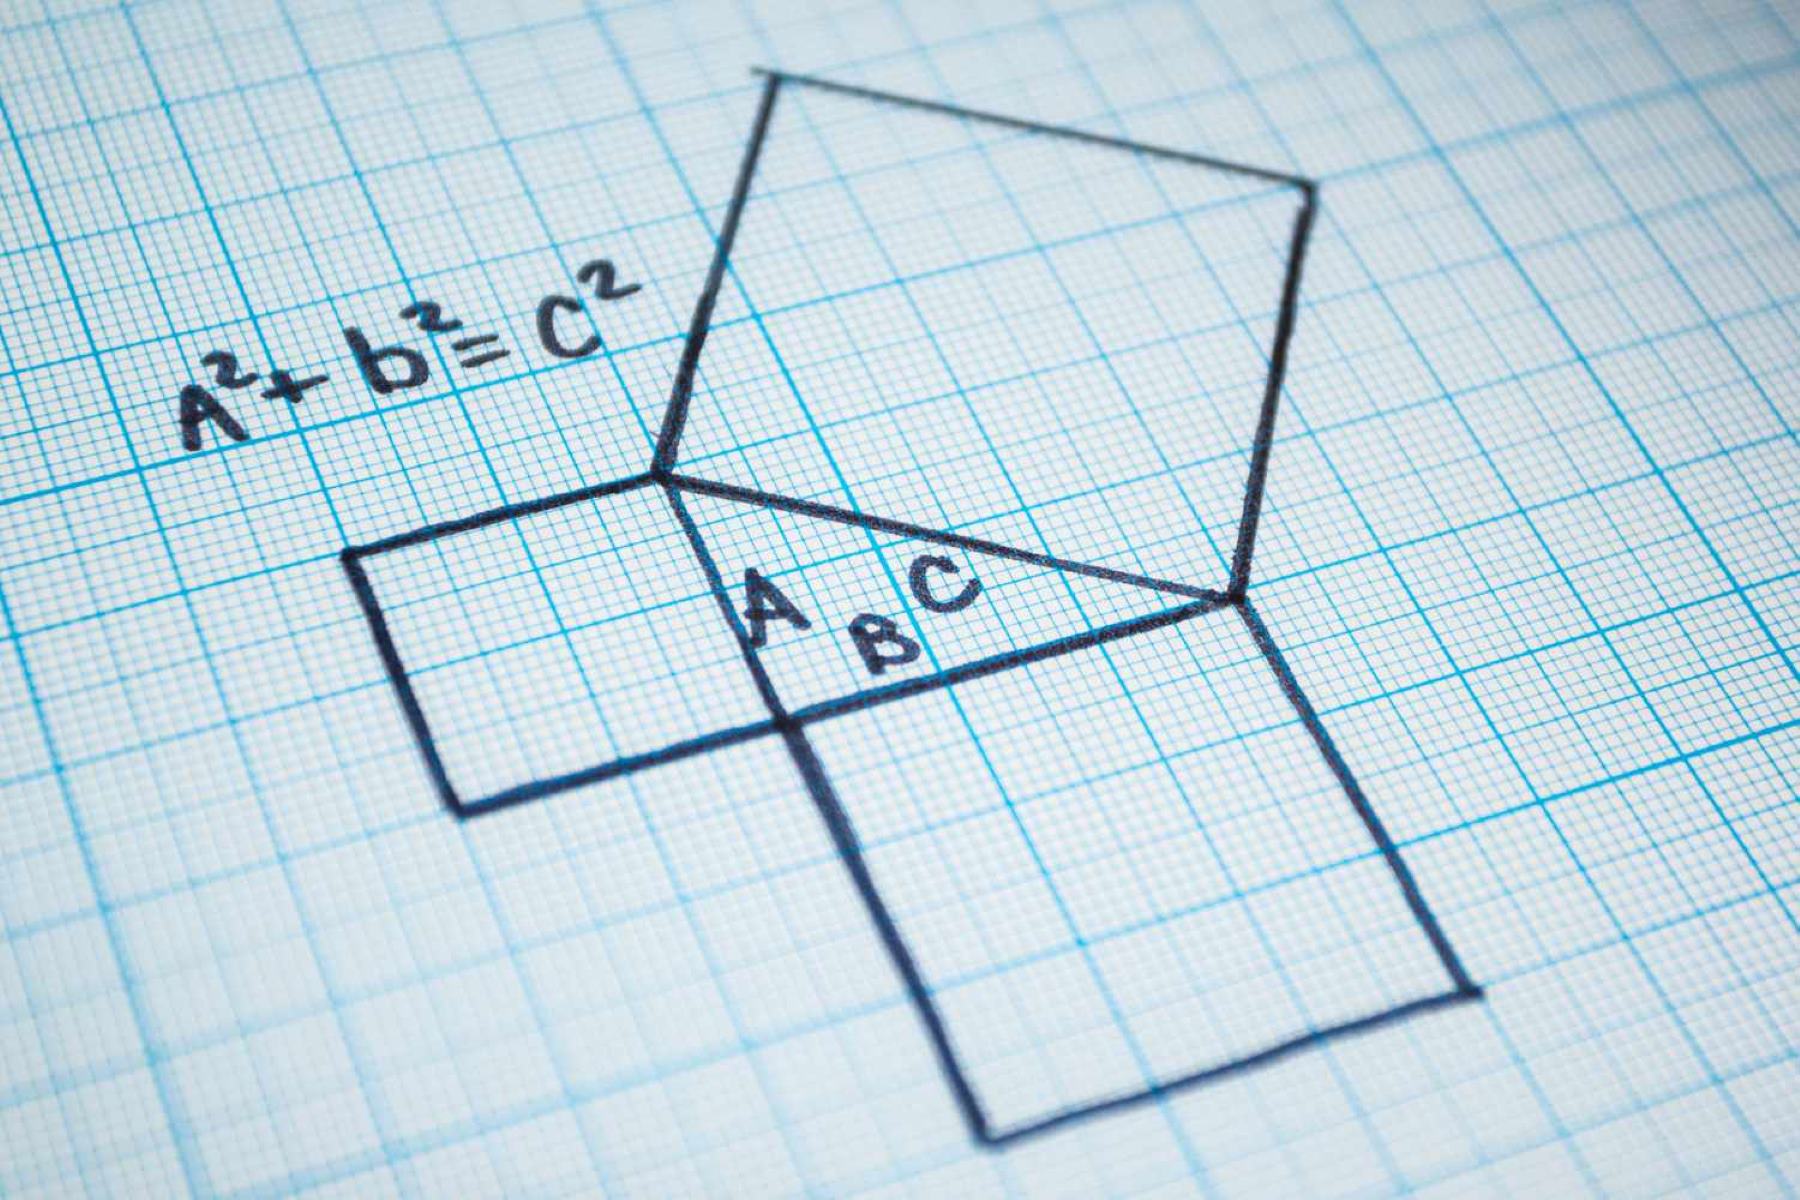 The Ultimate Triangle Secret: A Pythagorean Theorem For Every Shape!